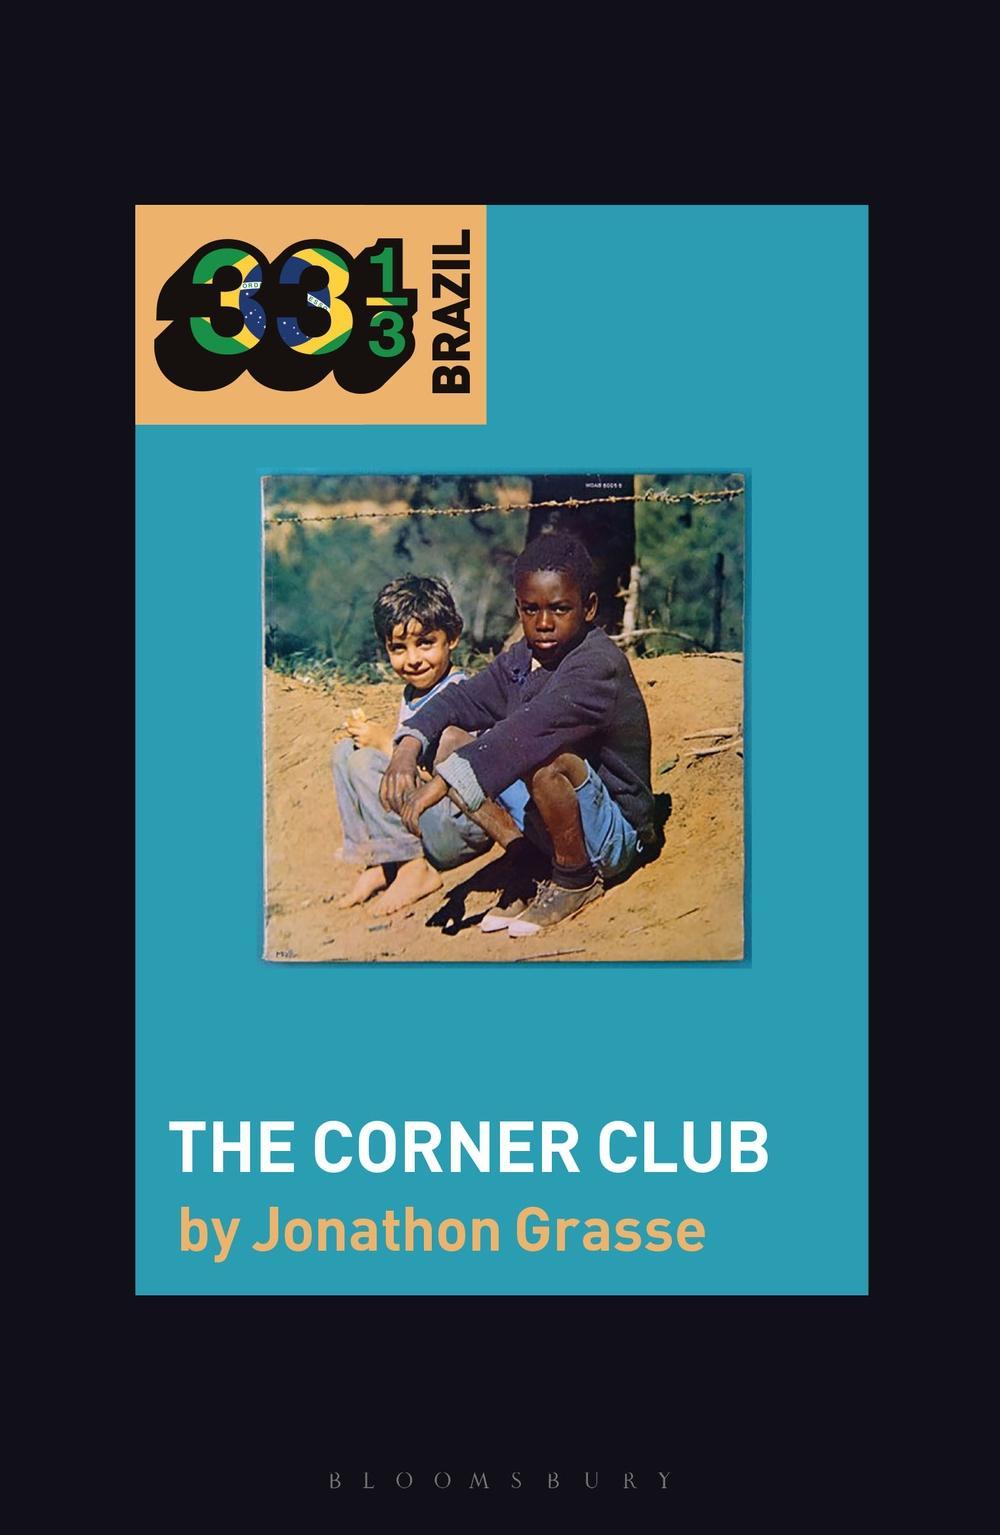 Milton Nascimento and Lo Borges's The Corner Club - Jonathon Grasse